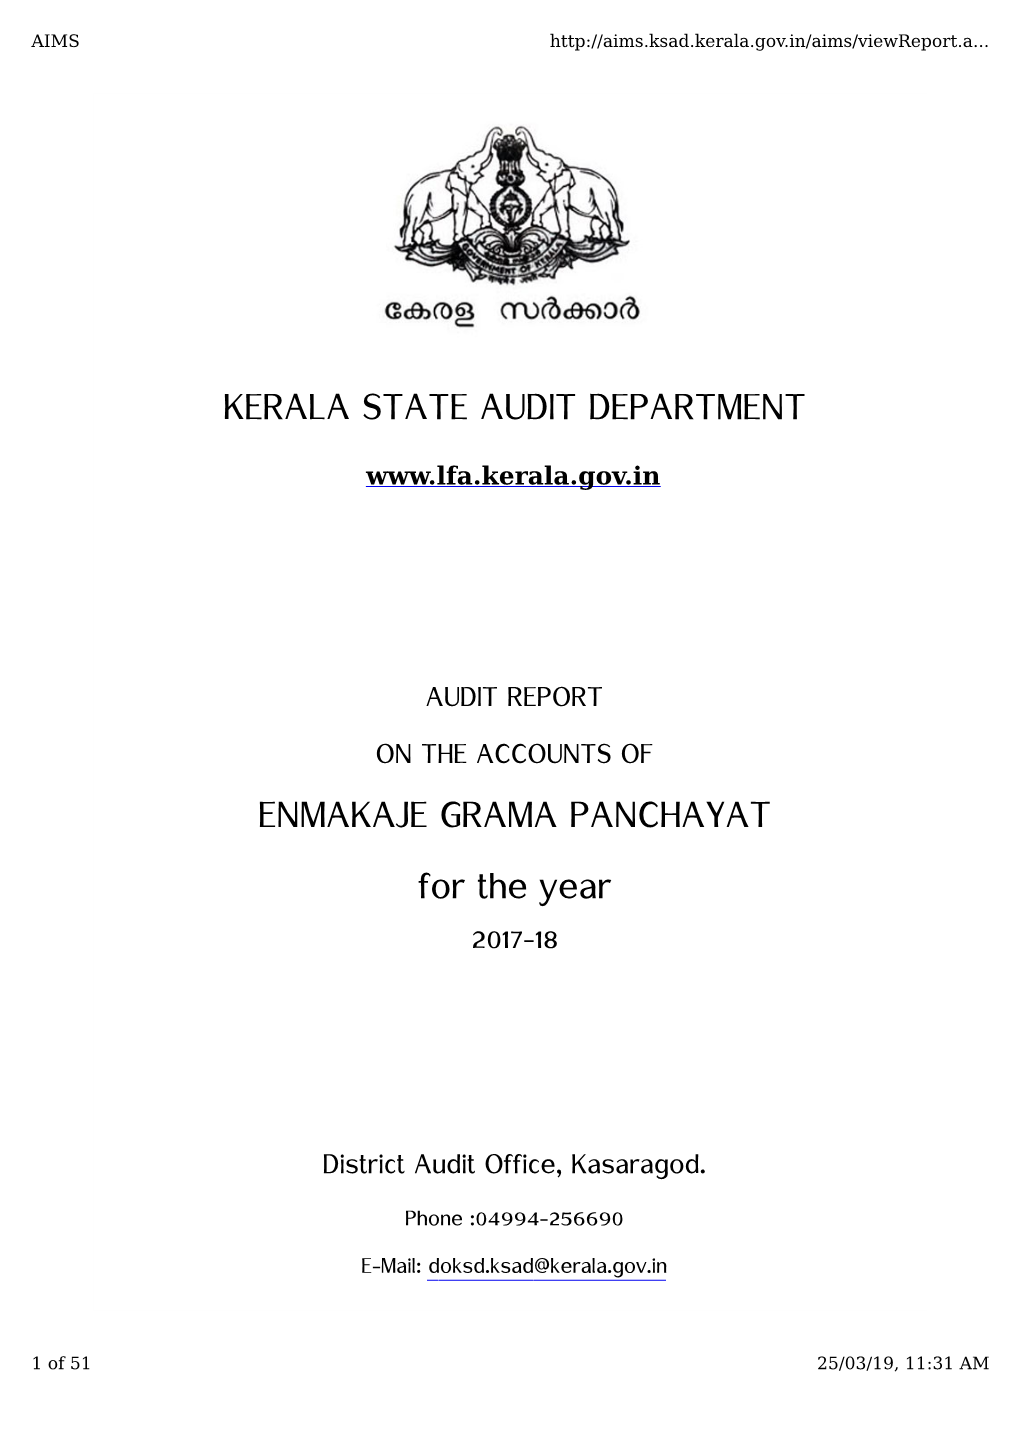 Kerala State Audit Department Enmakaje